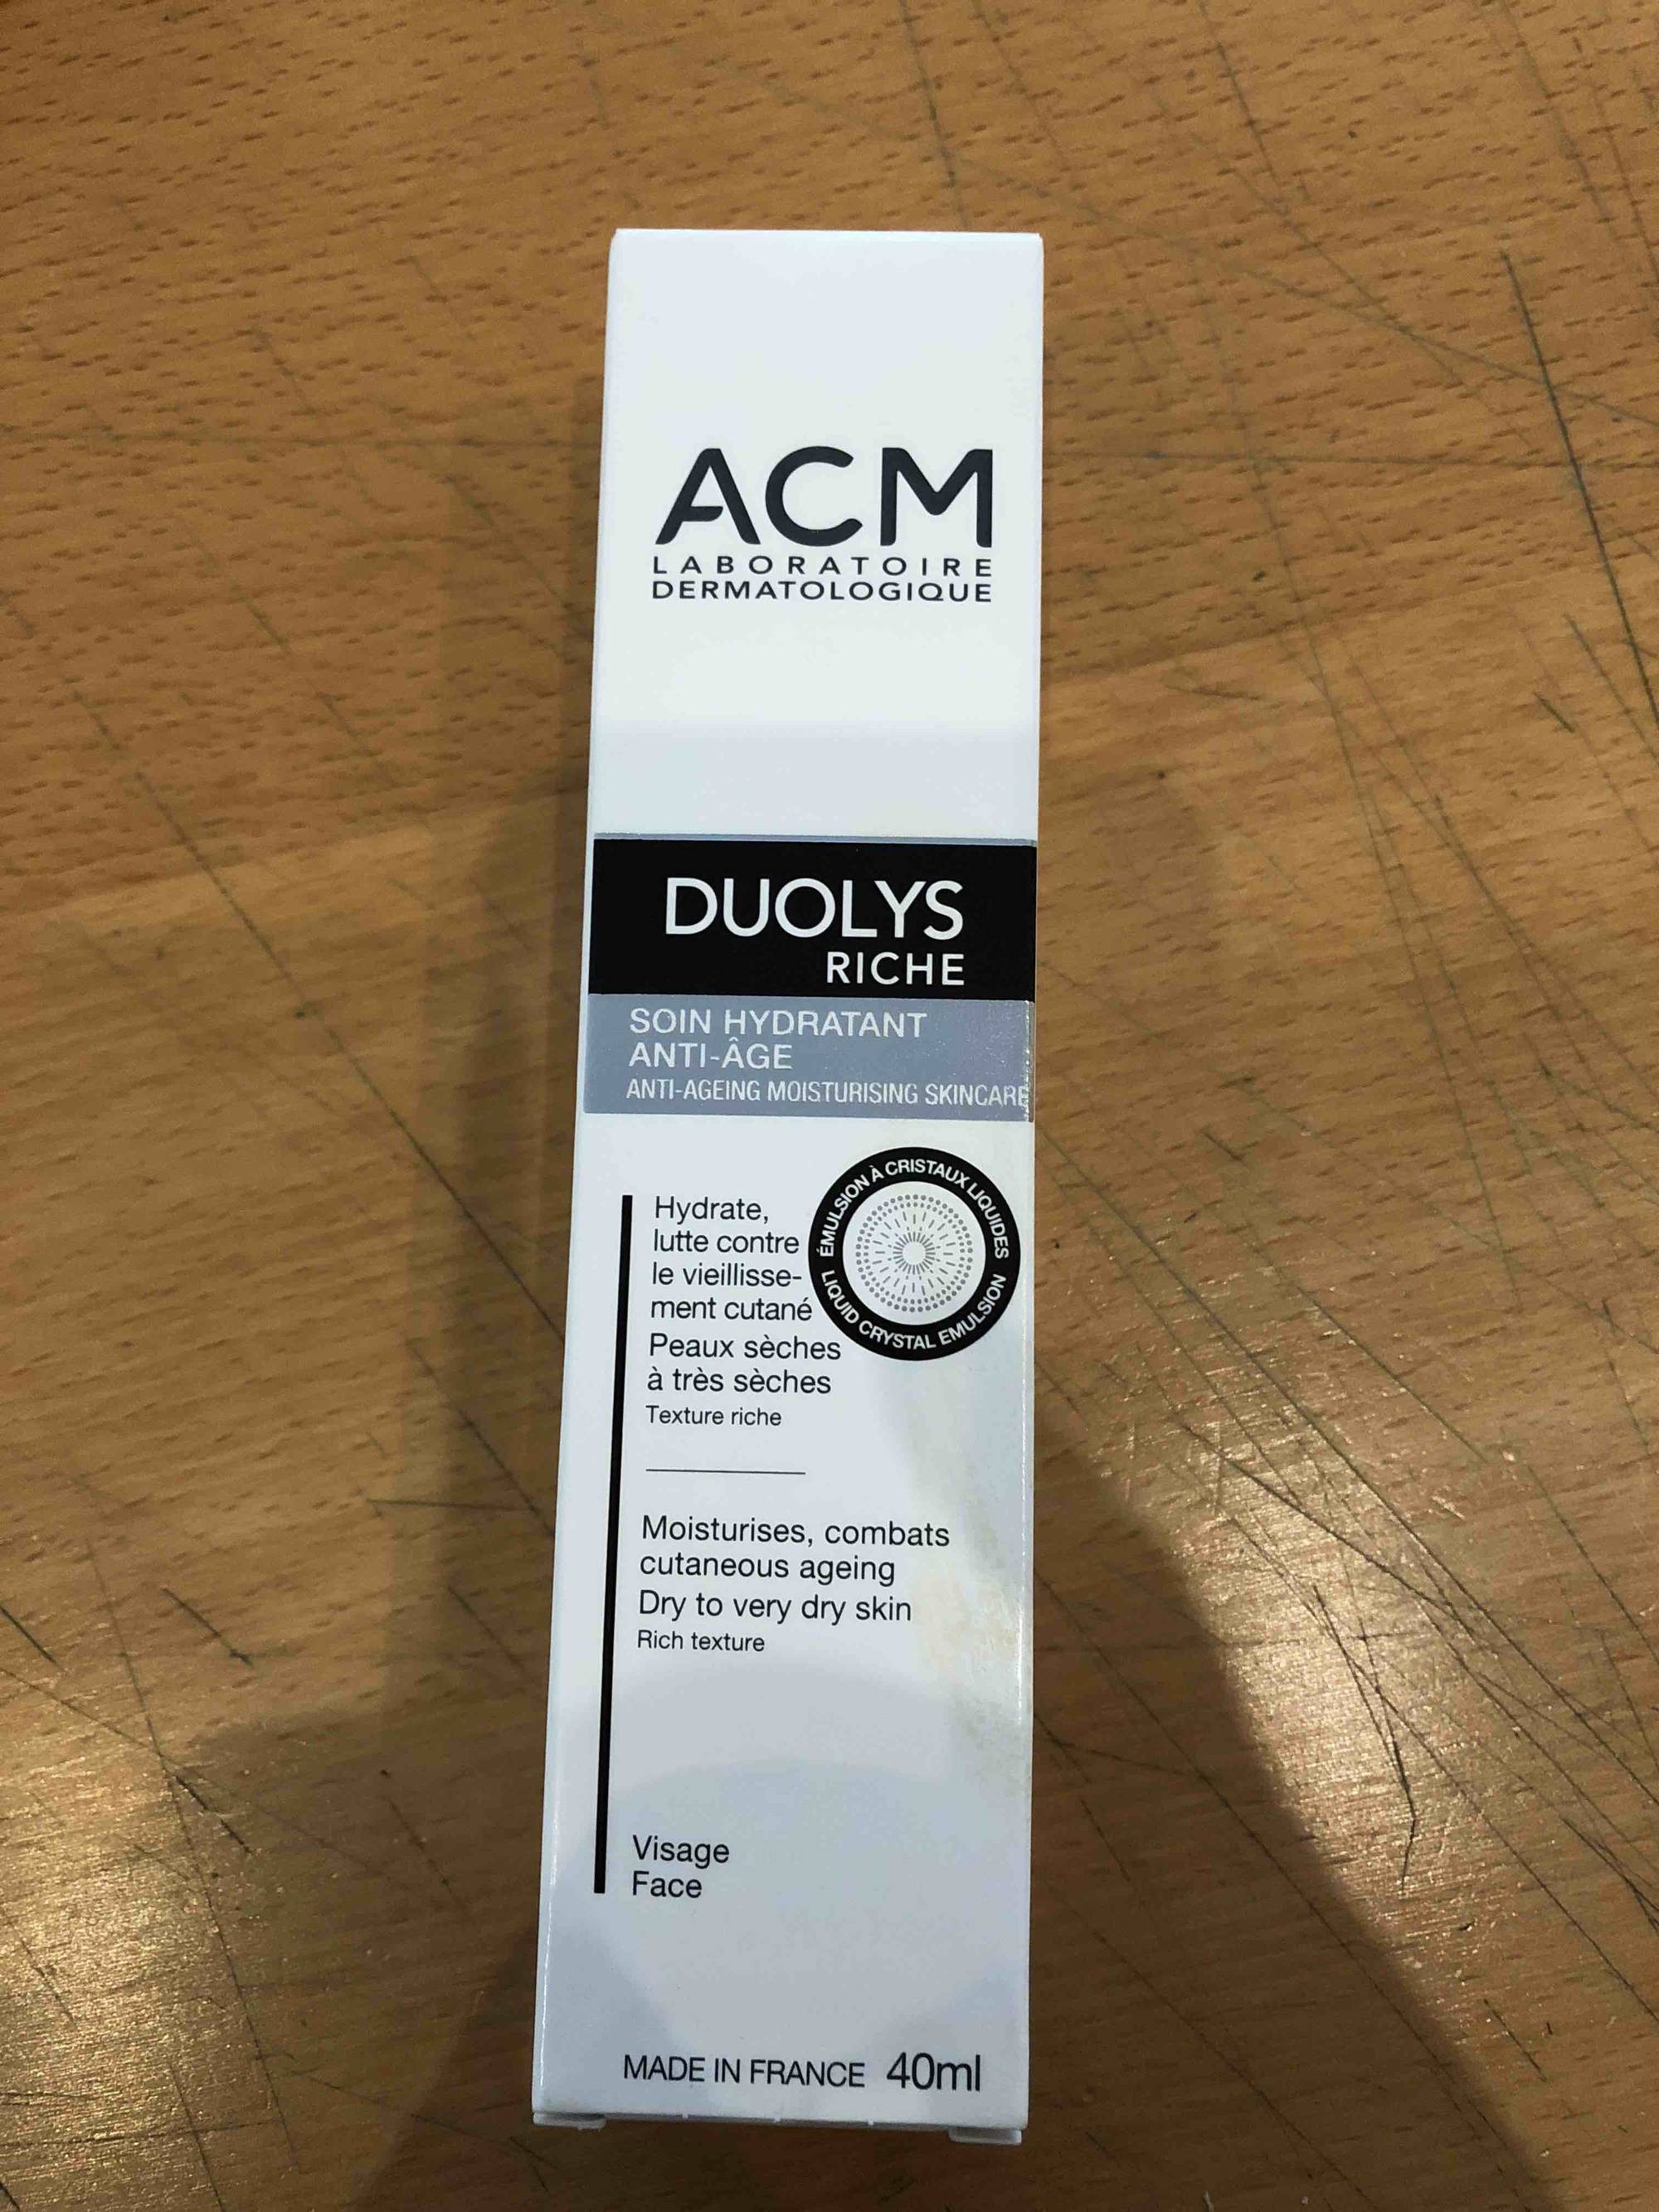 ACM - Duolys riche - Soin hydratant anti-âge